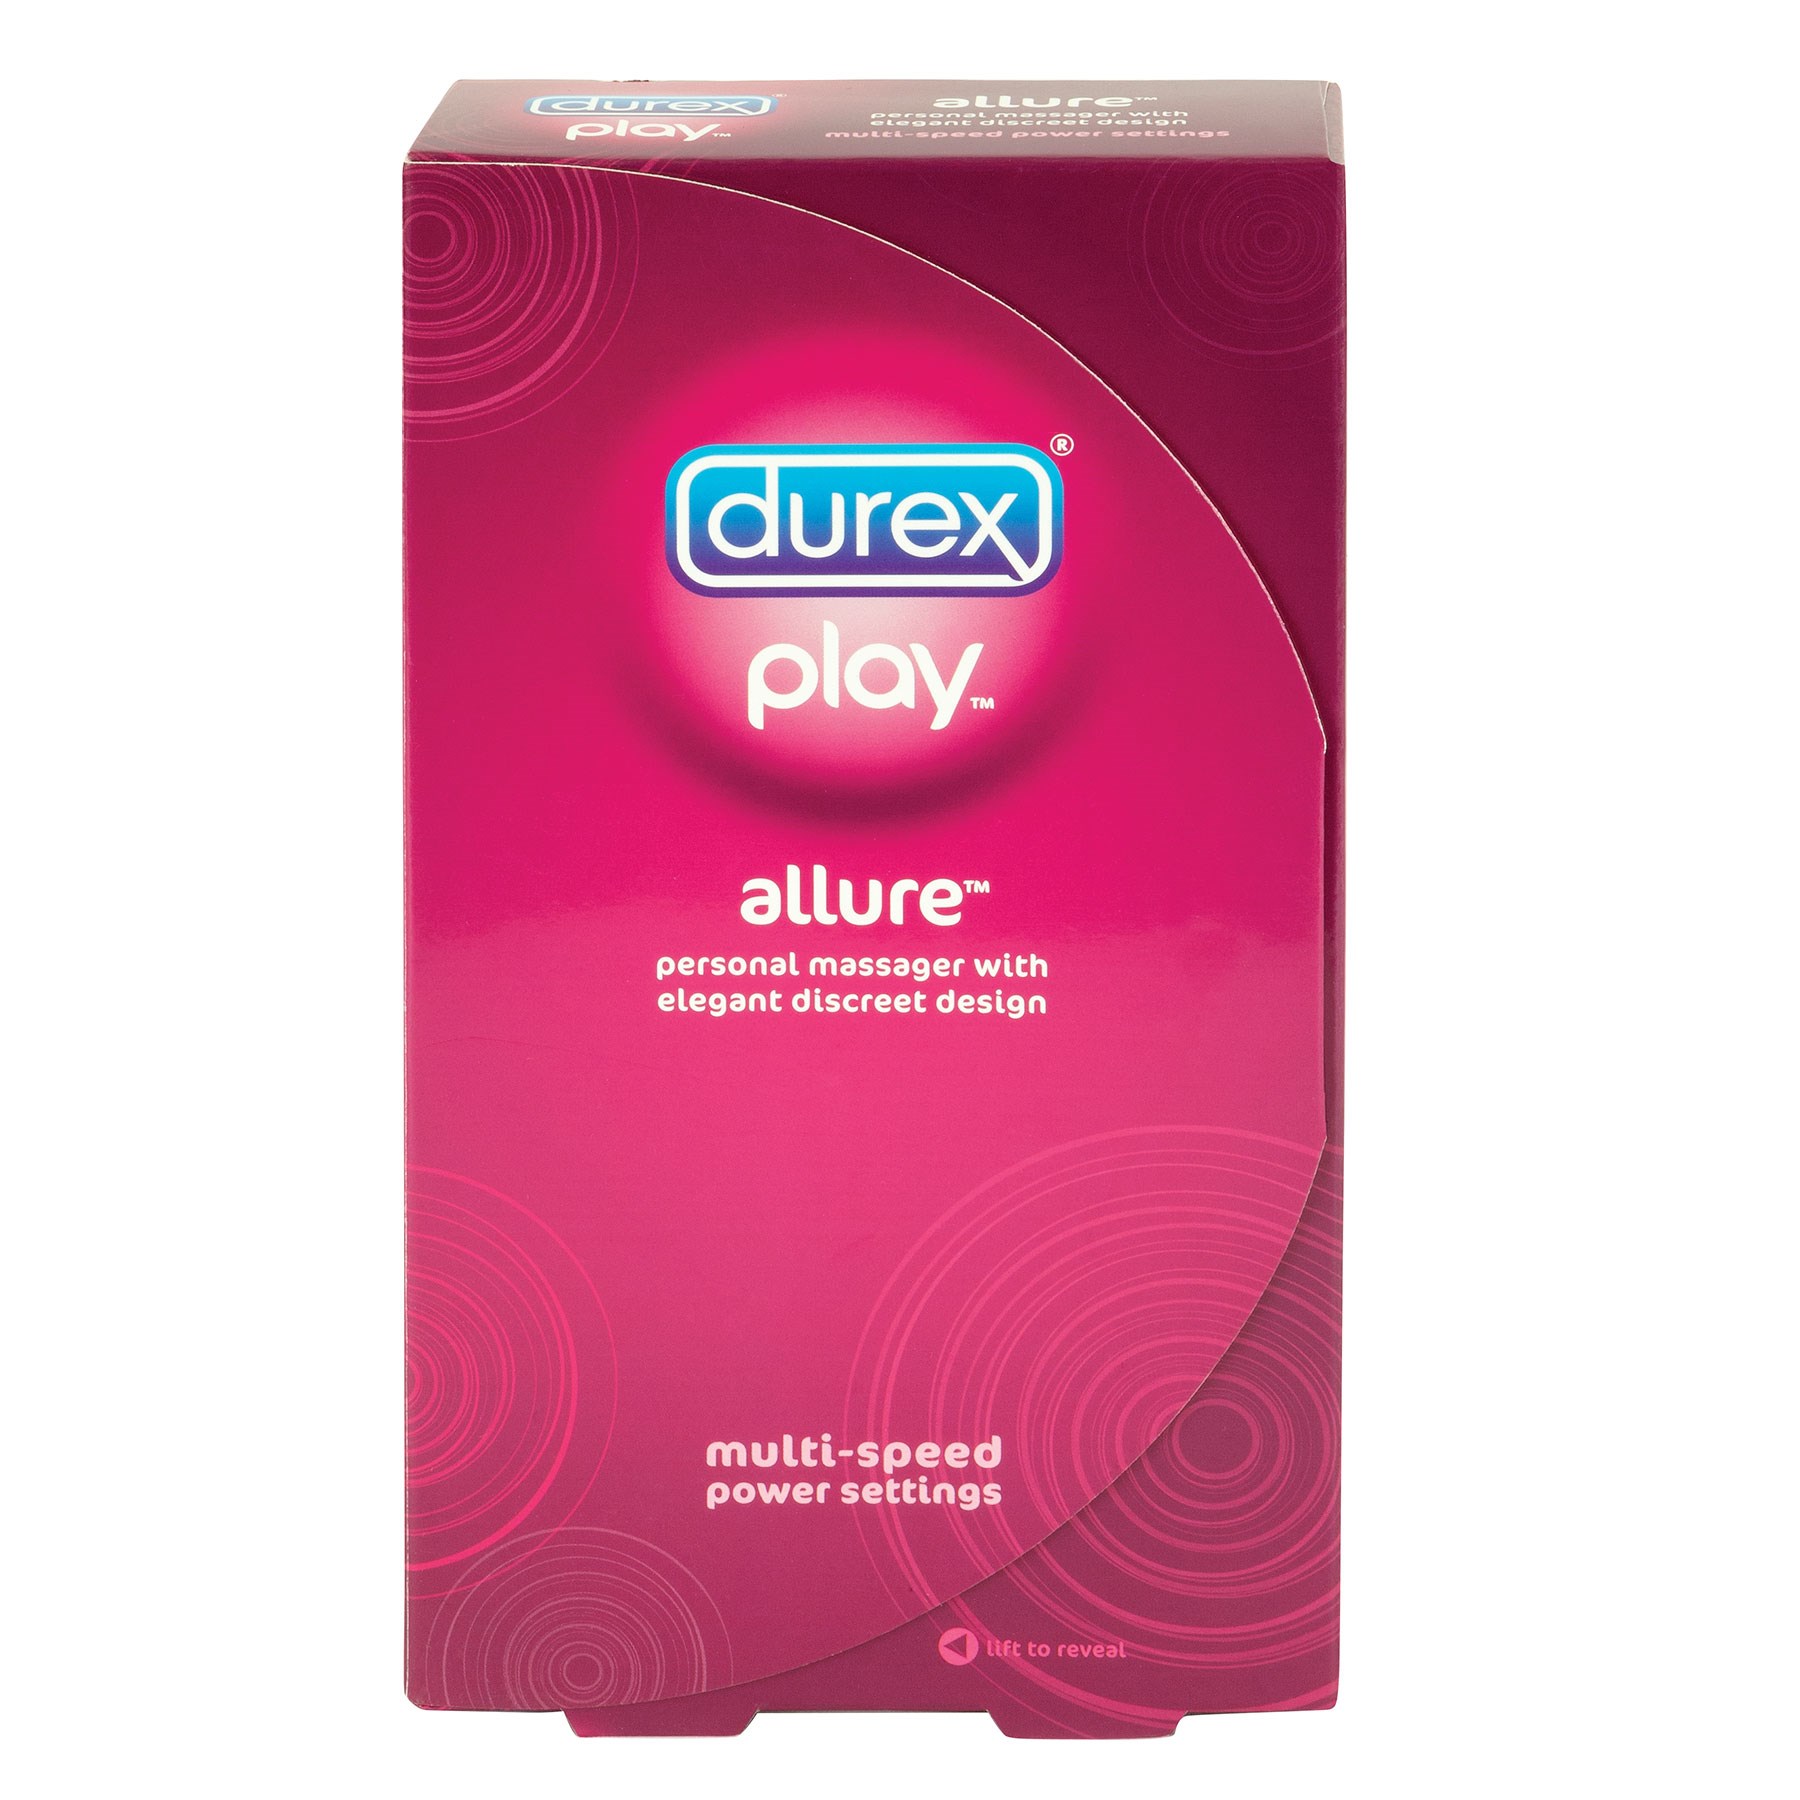 Durex Play Allure Massager front of box